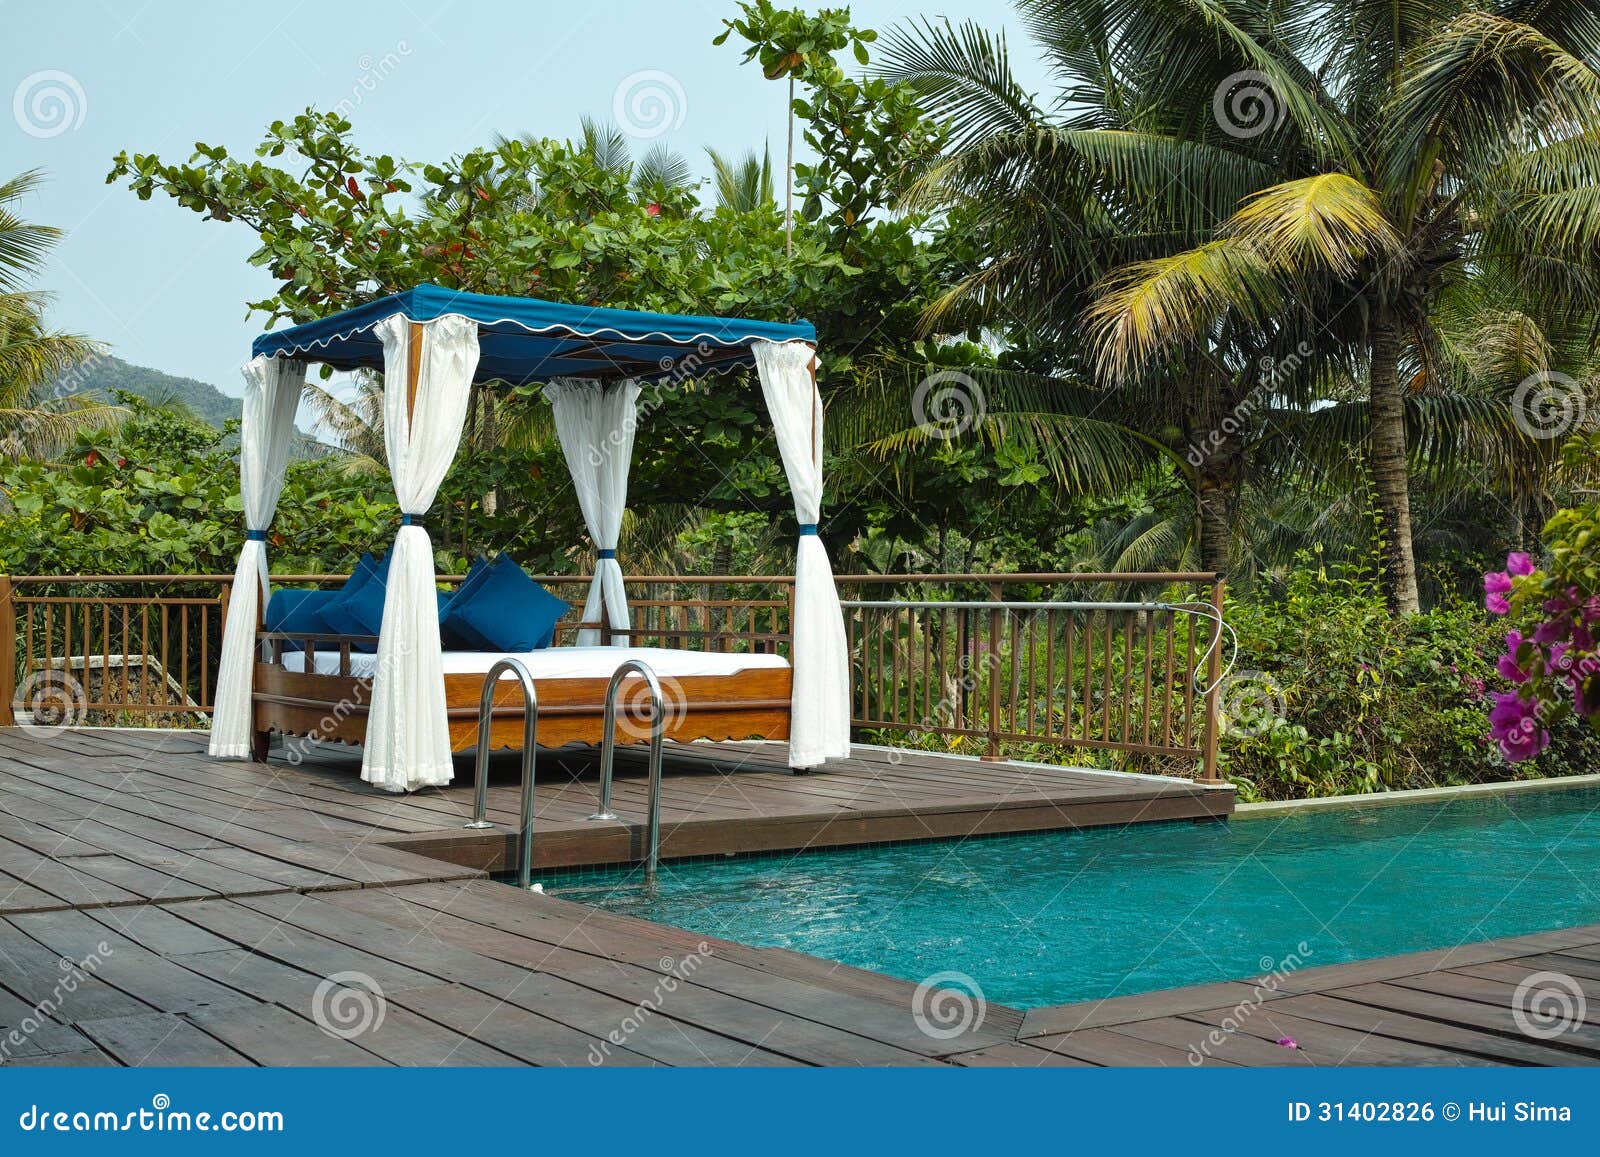 tropical cabana and swimming pool